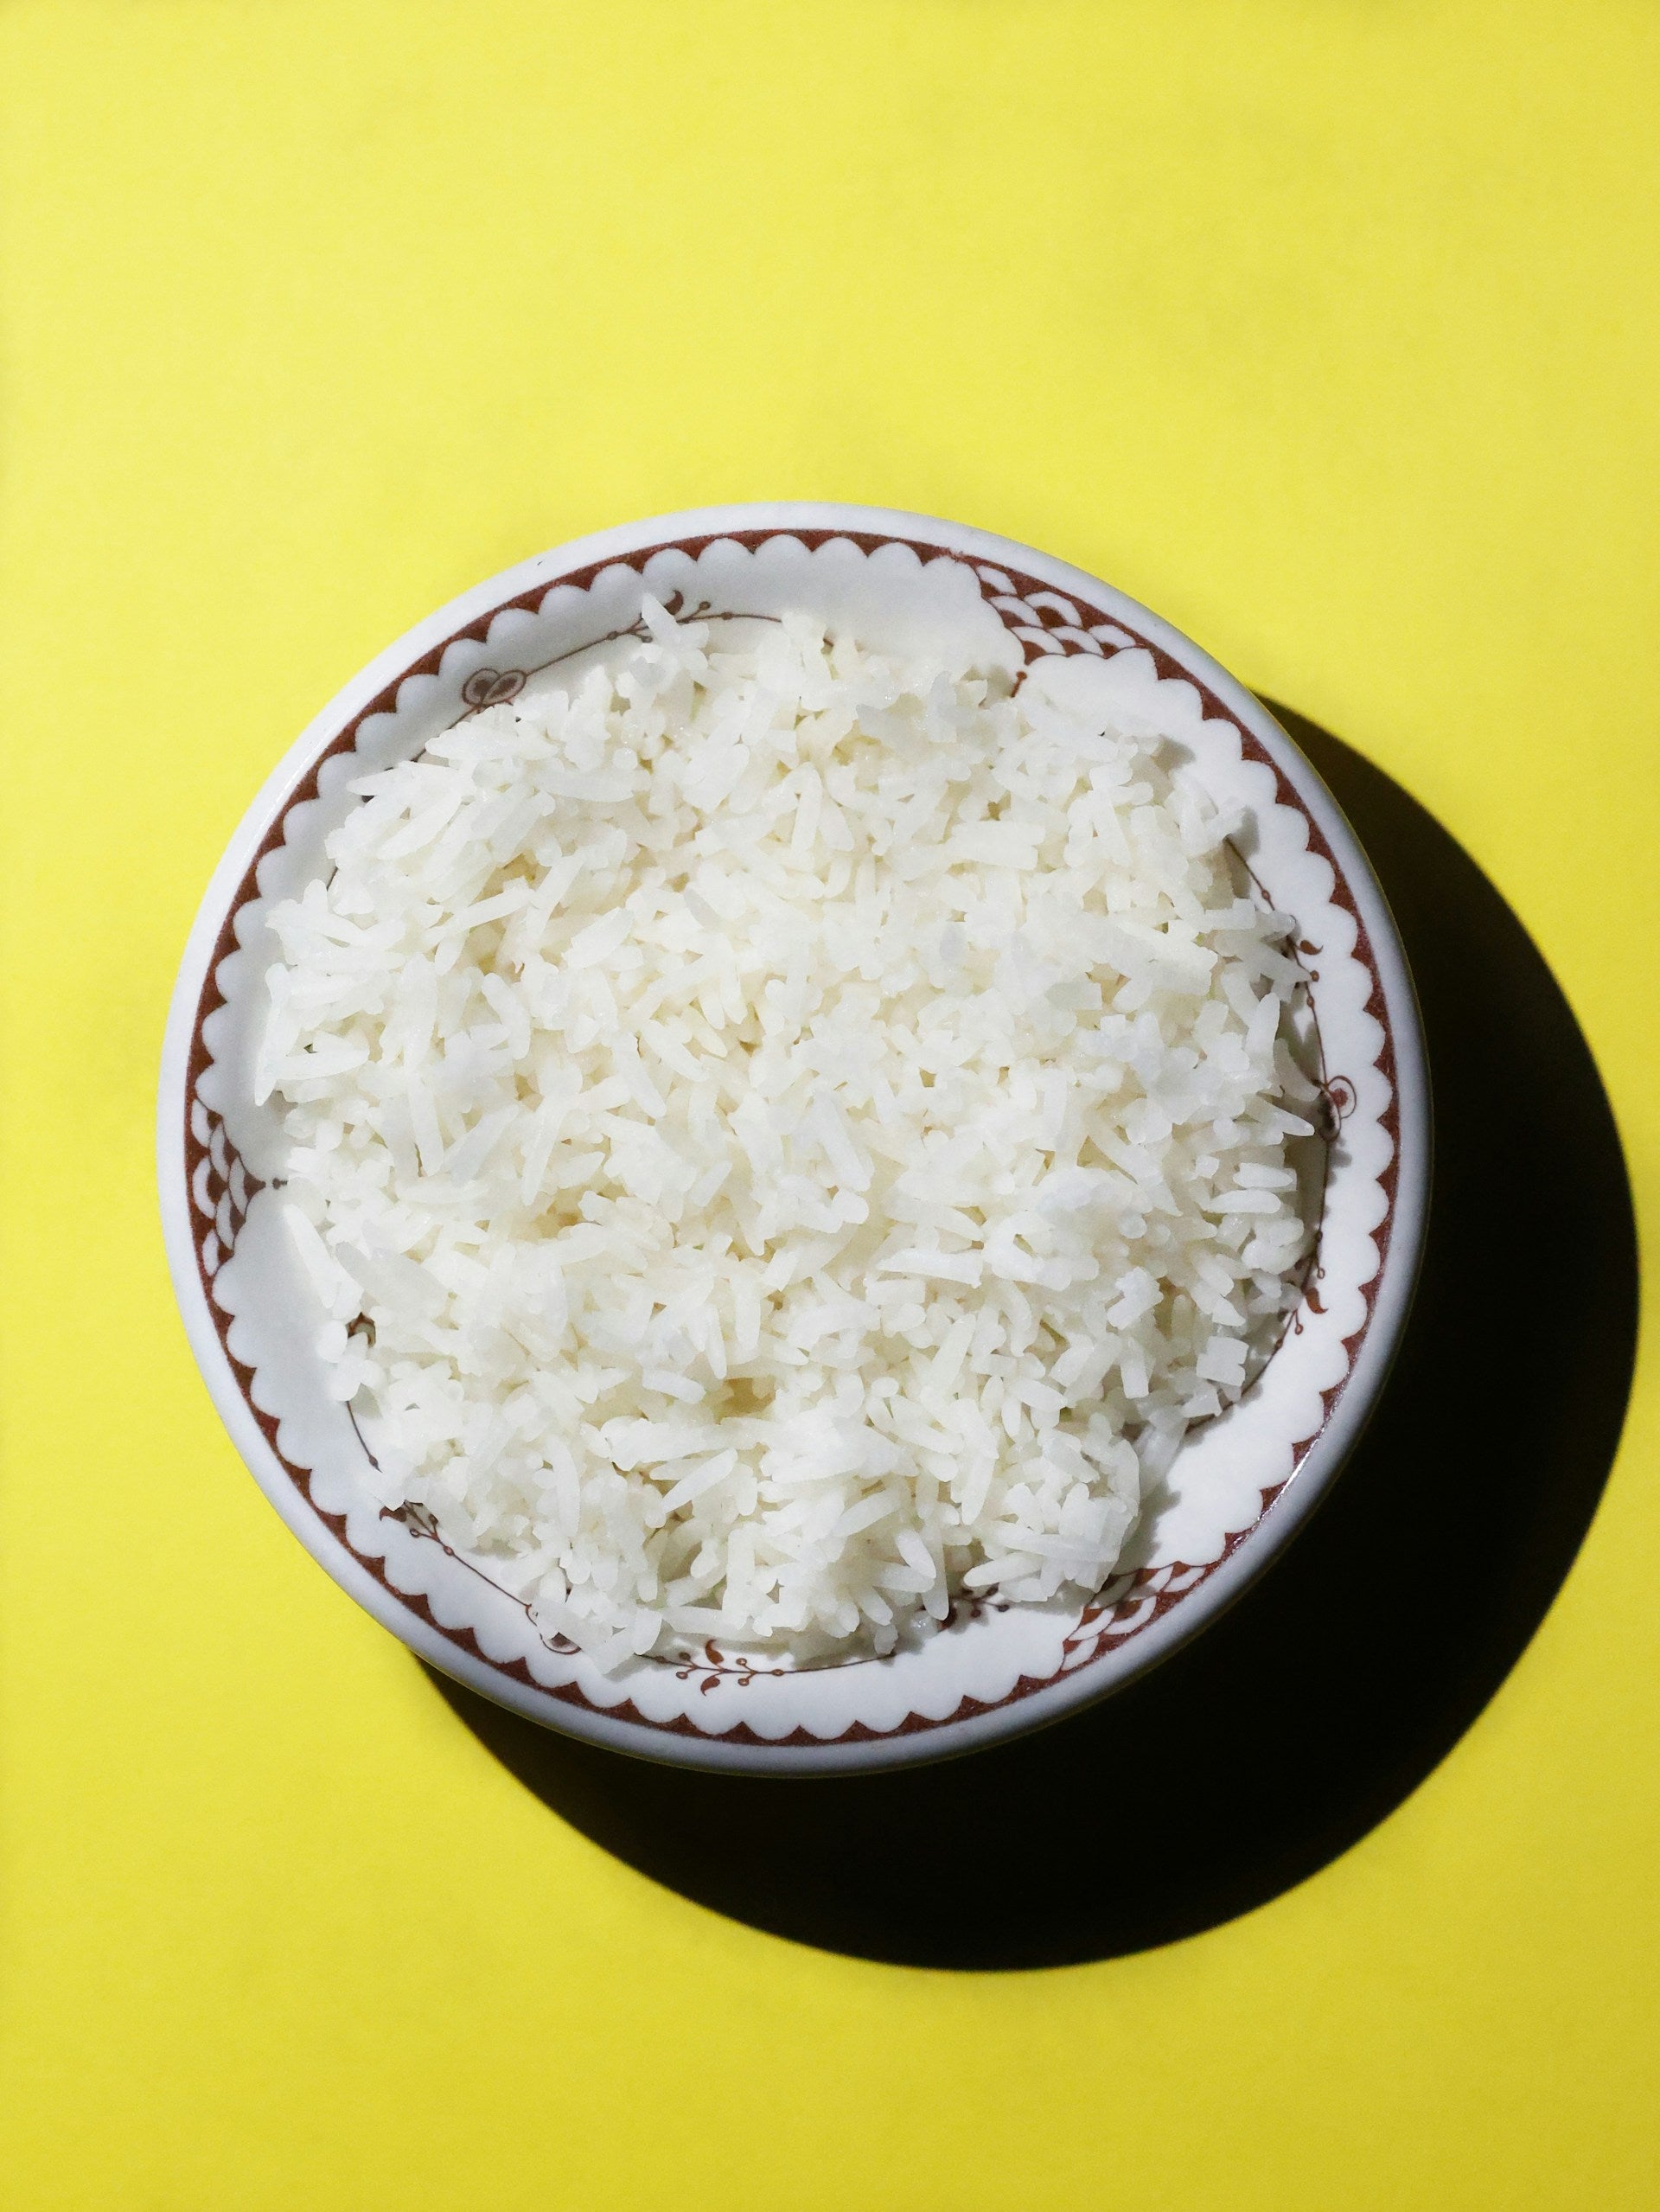 How Long Can You Keep Rice In The Fridge? | Fridge.com